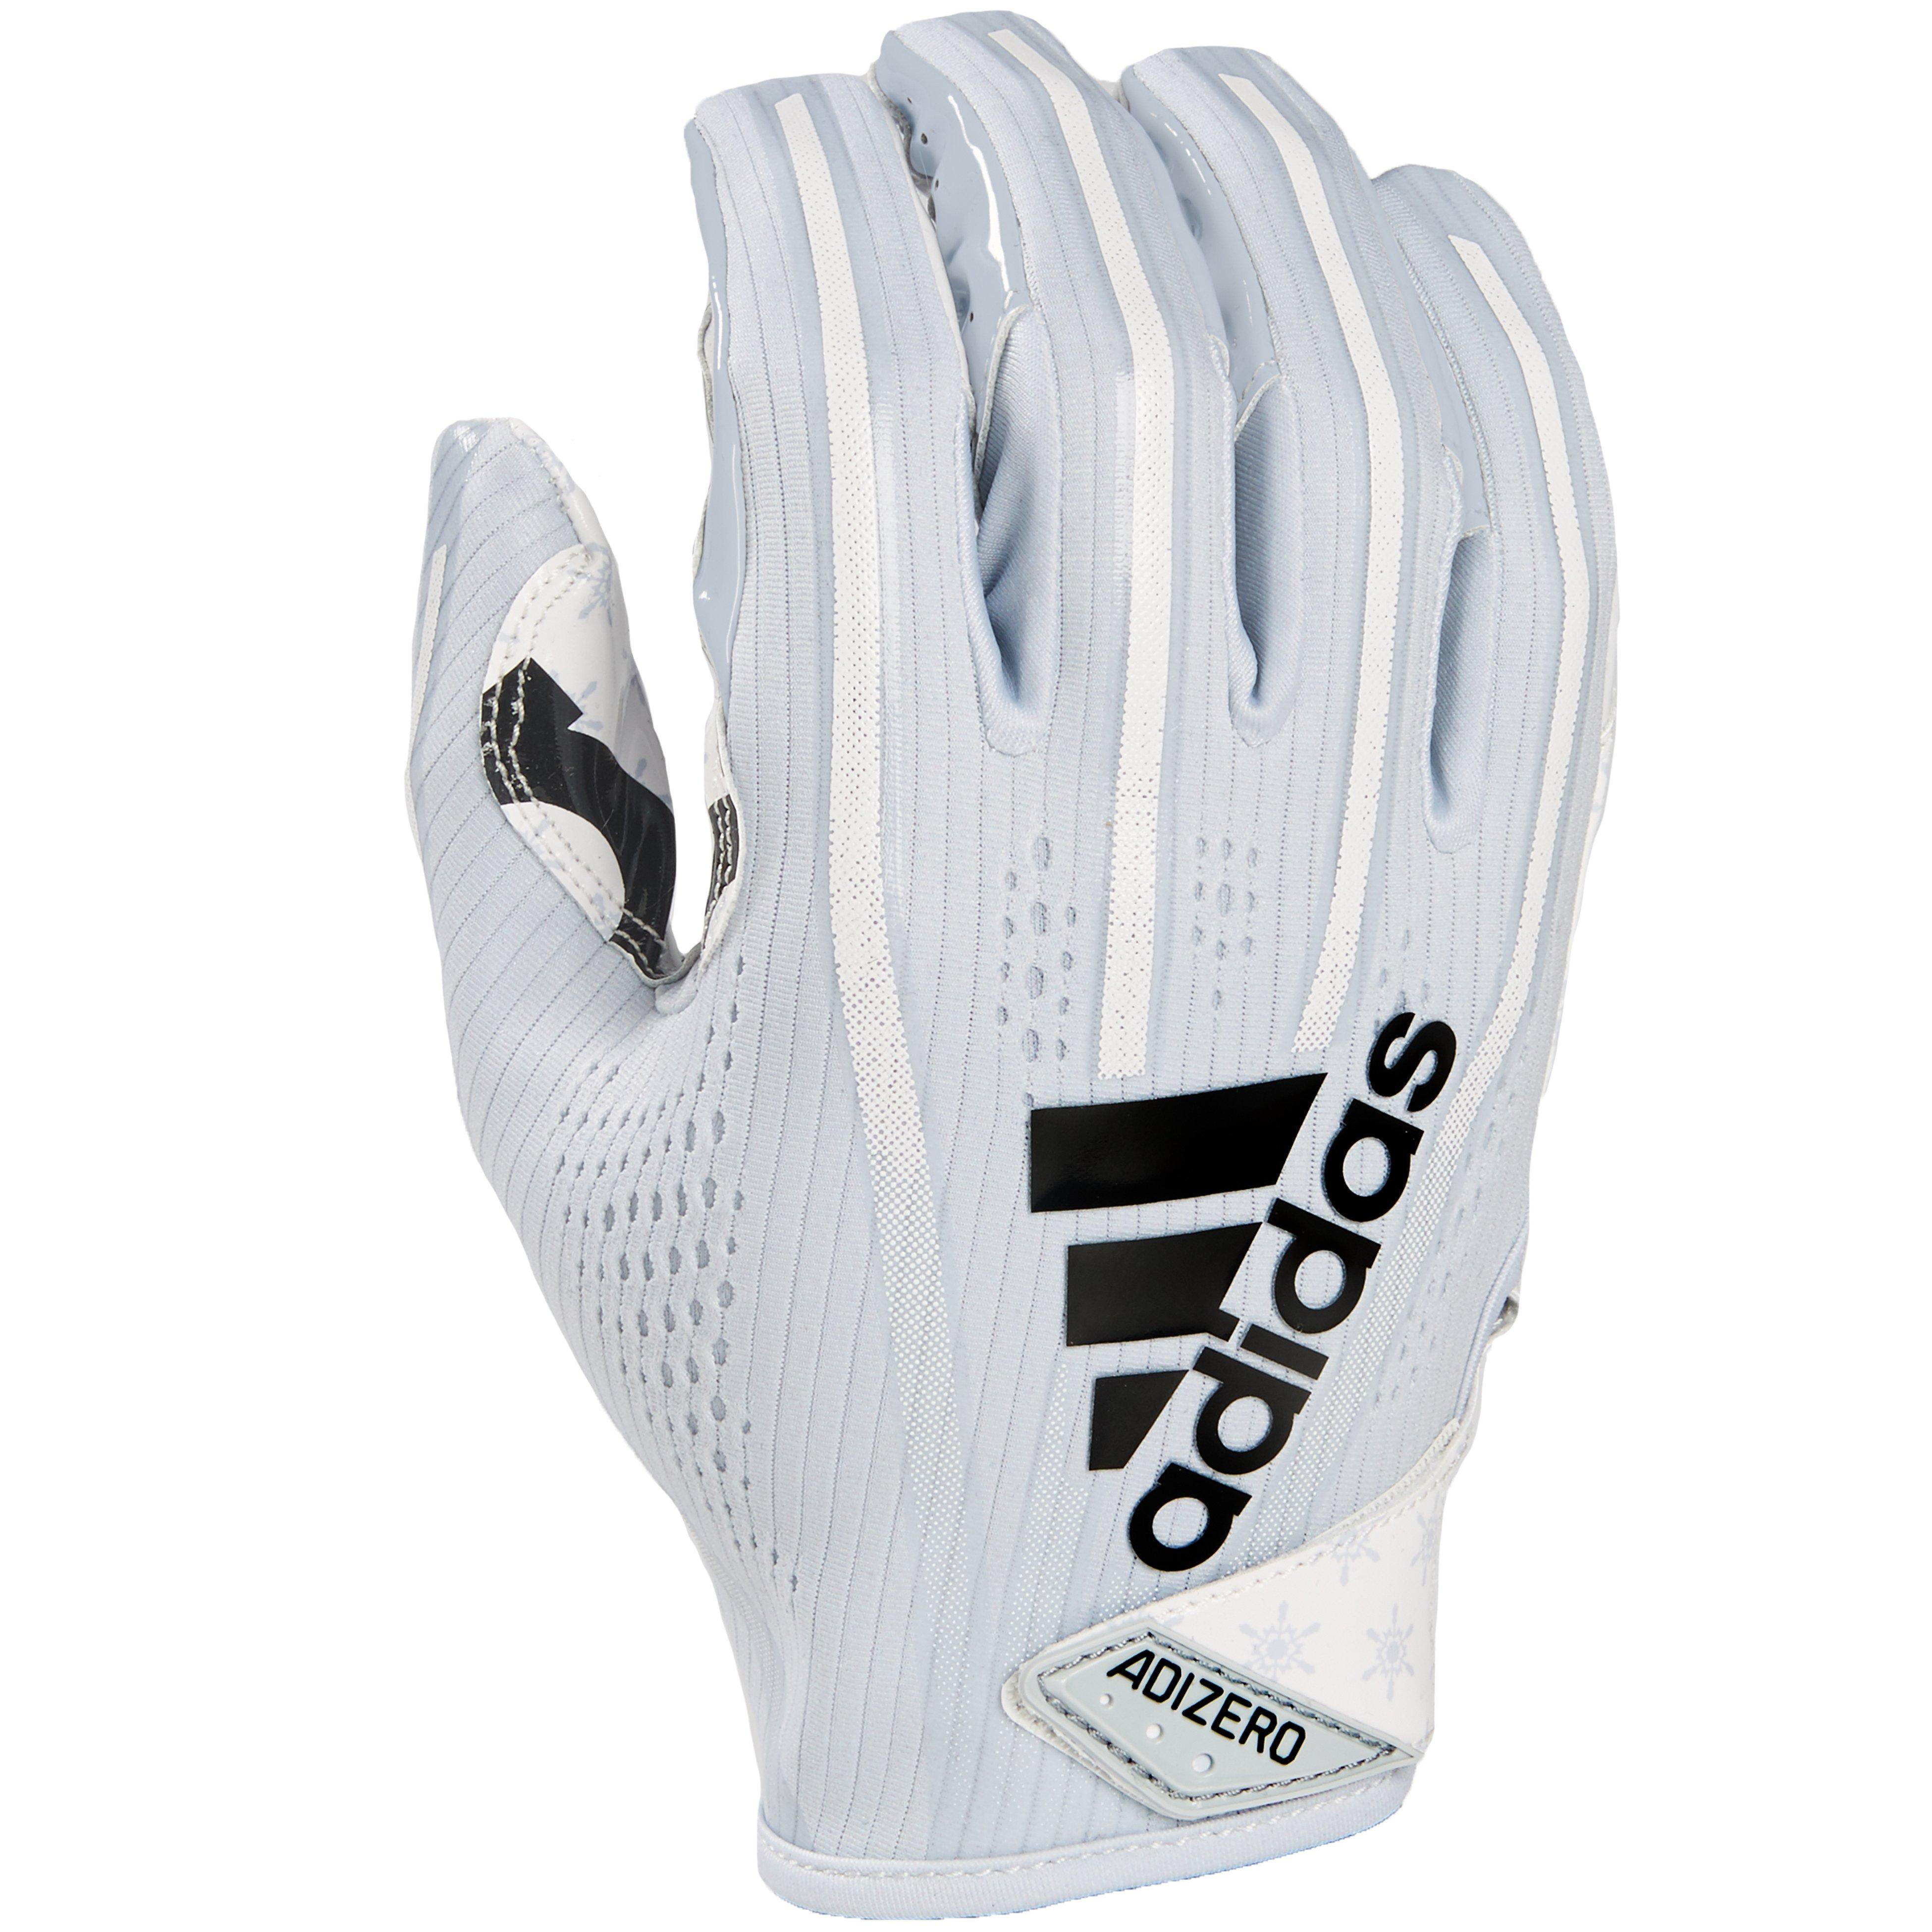 adizero gloves 7.0